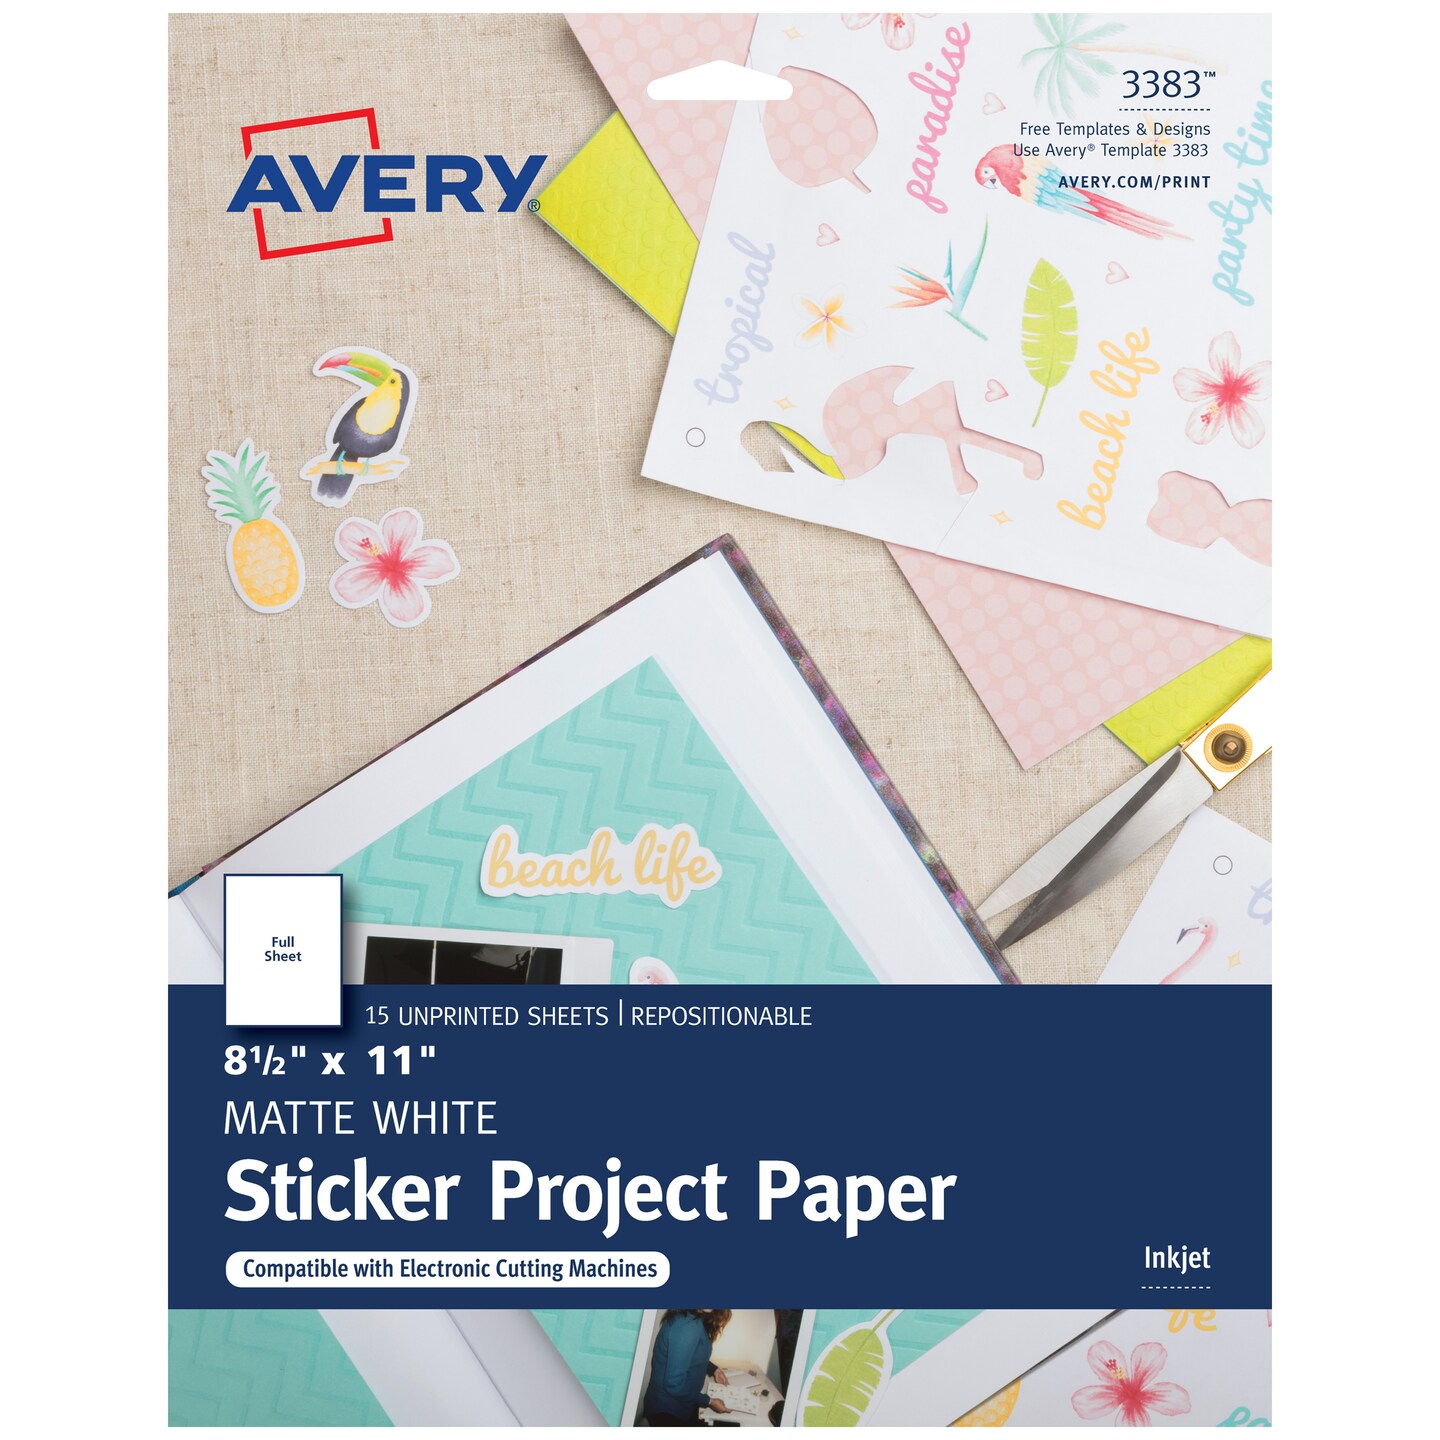 Avery Heat Transfer Paper for Dark Fabrics, 8.5 x 11, Inkjet Printer, 5  Printable Iron On Transfers (3279)